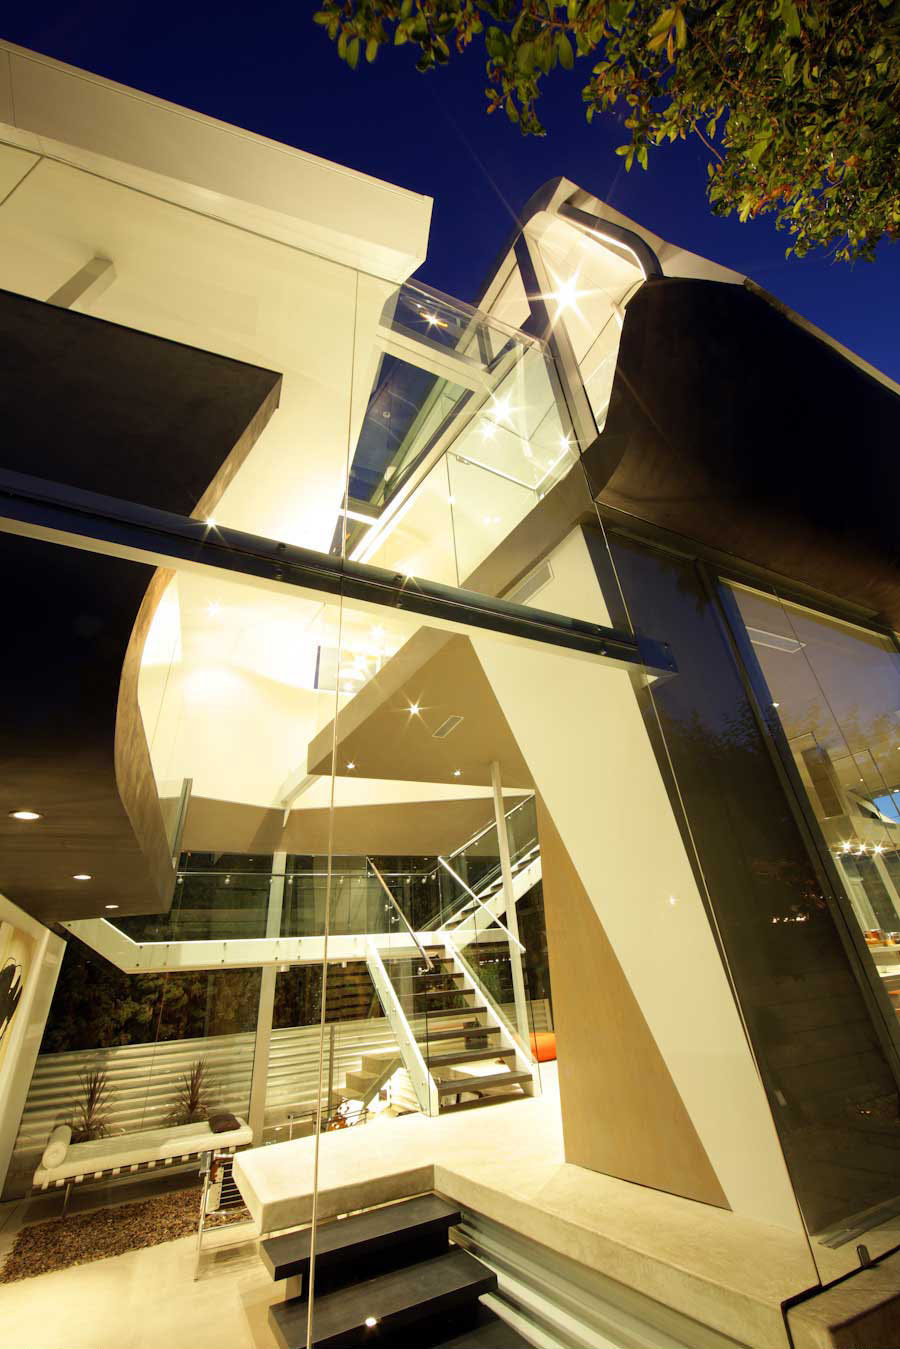 Skywave House – An Artistic Residential Architecture  iDesignArch  Interior Design 